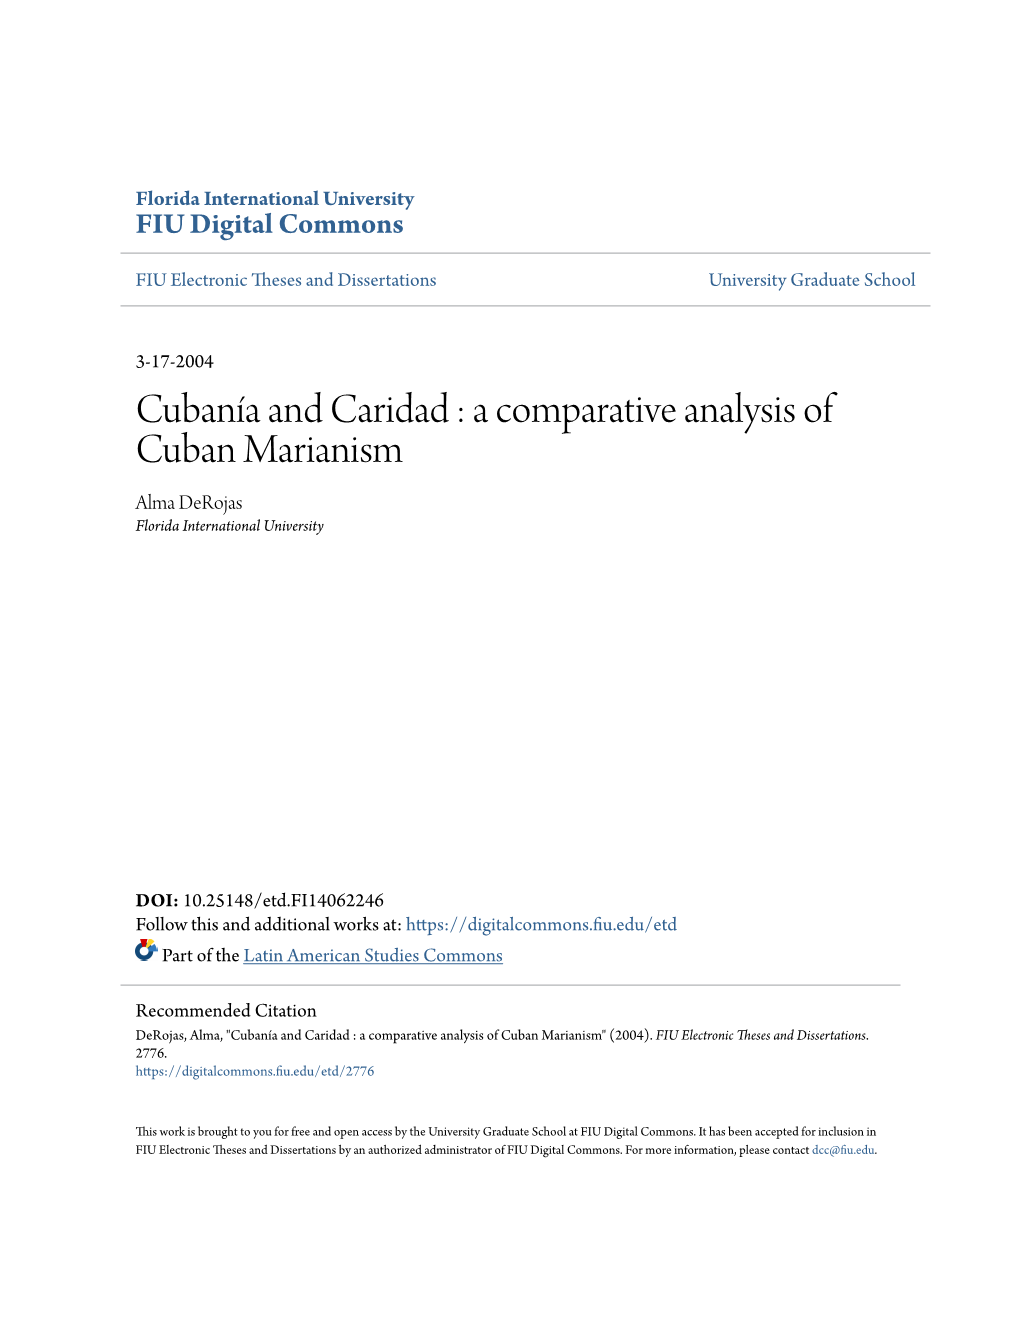 A Comparative Analysis of Cuban Marianism Alma Derojas Florida International University